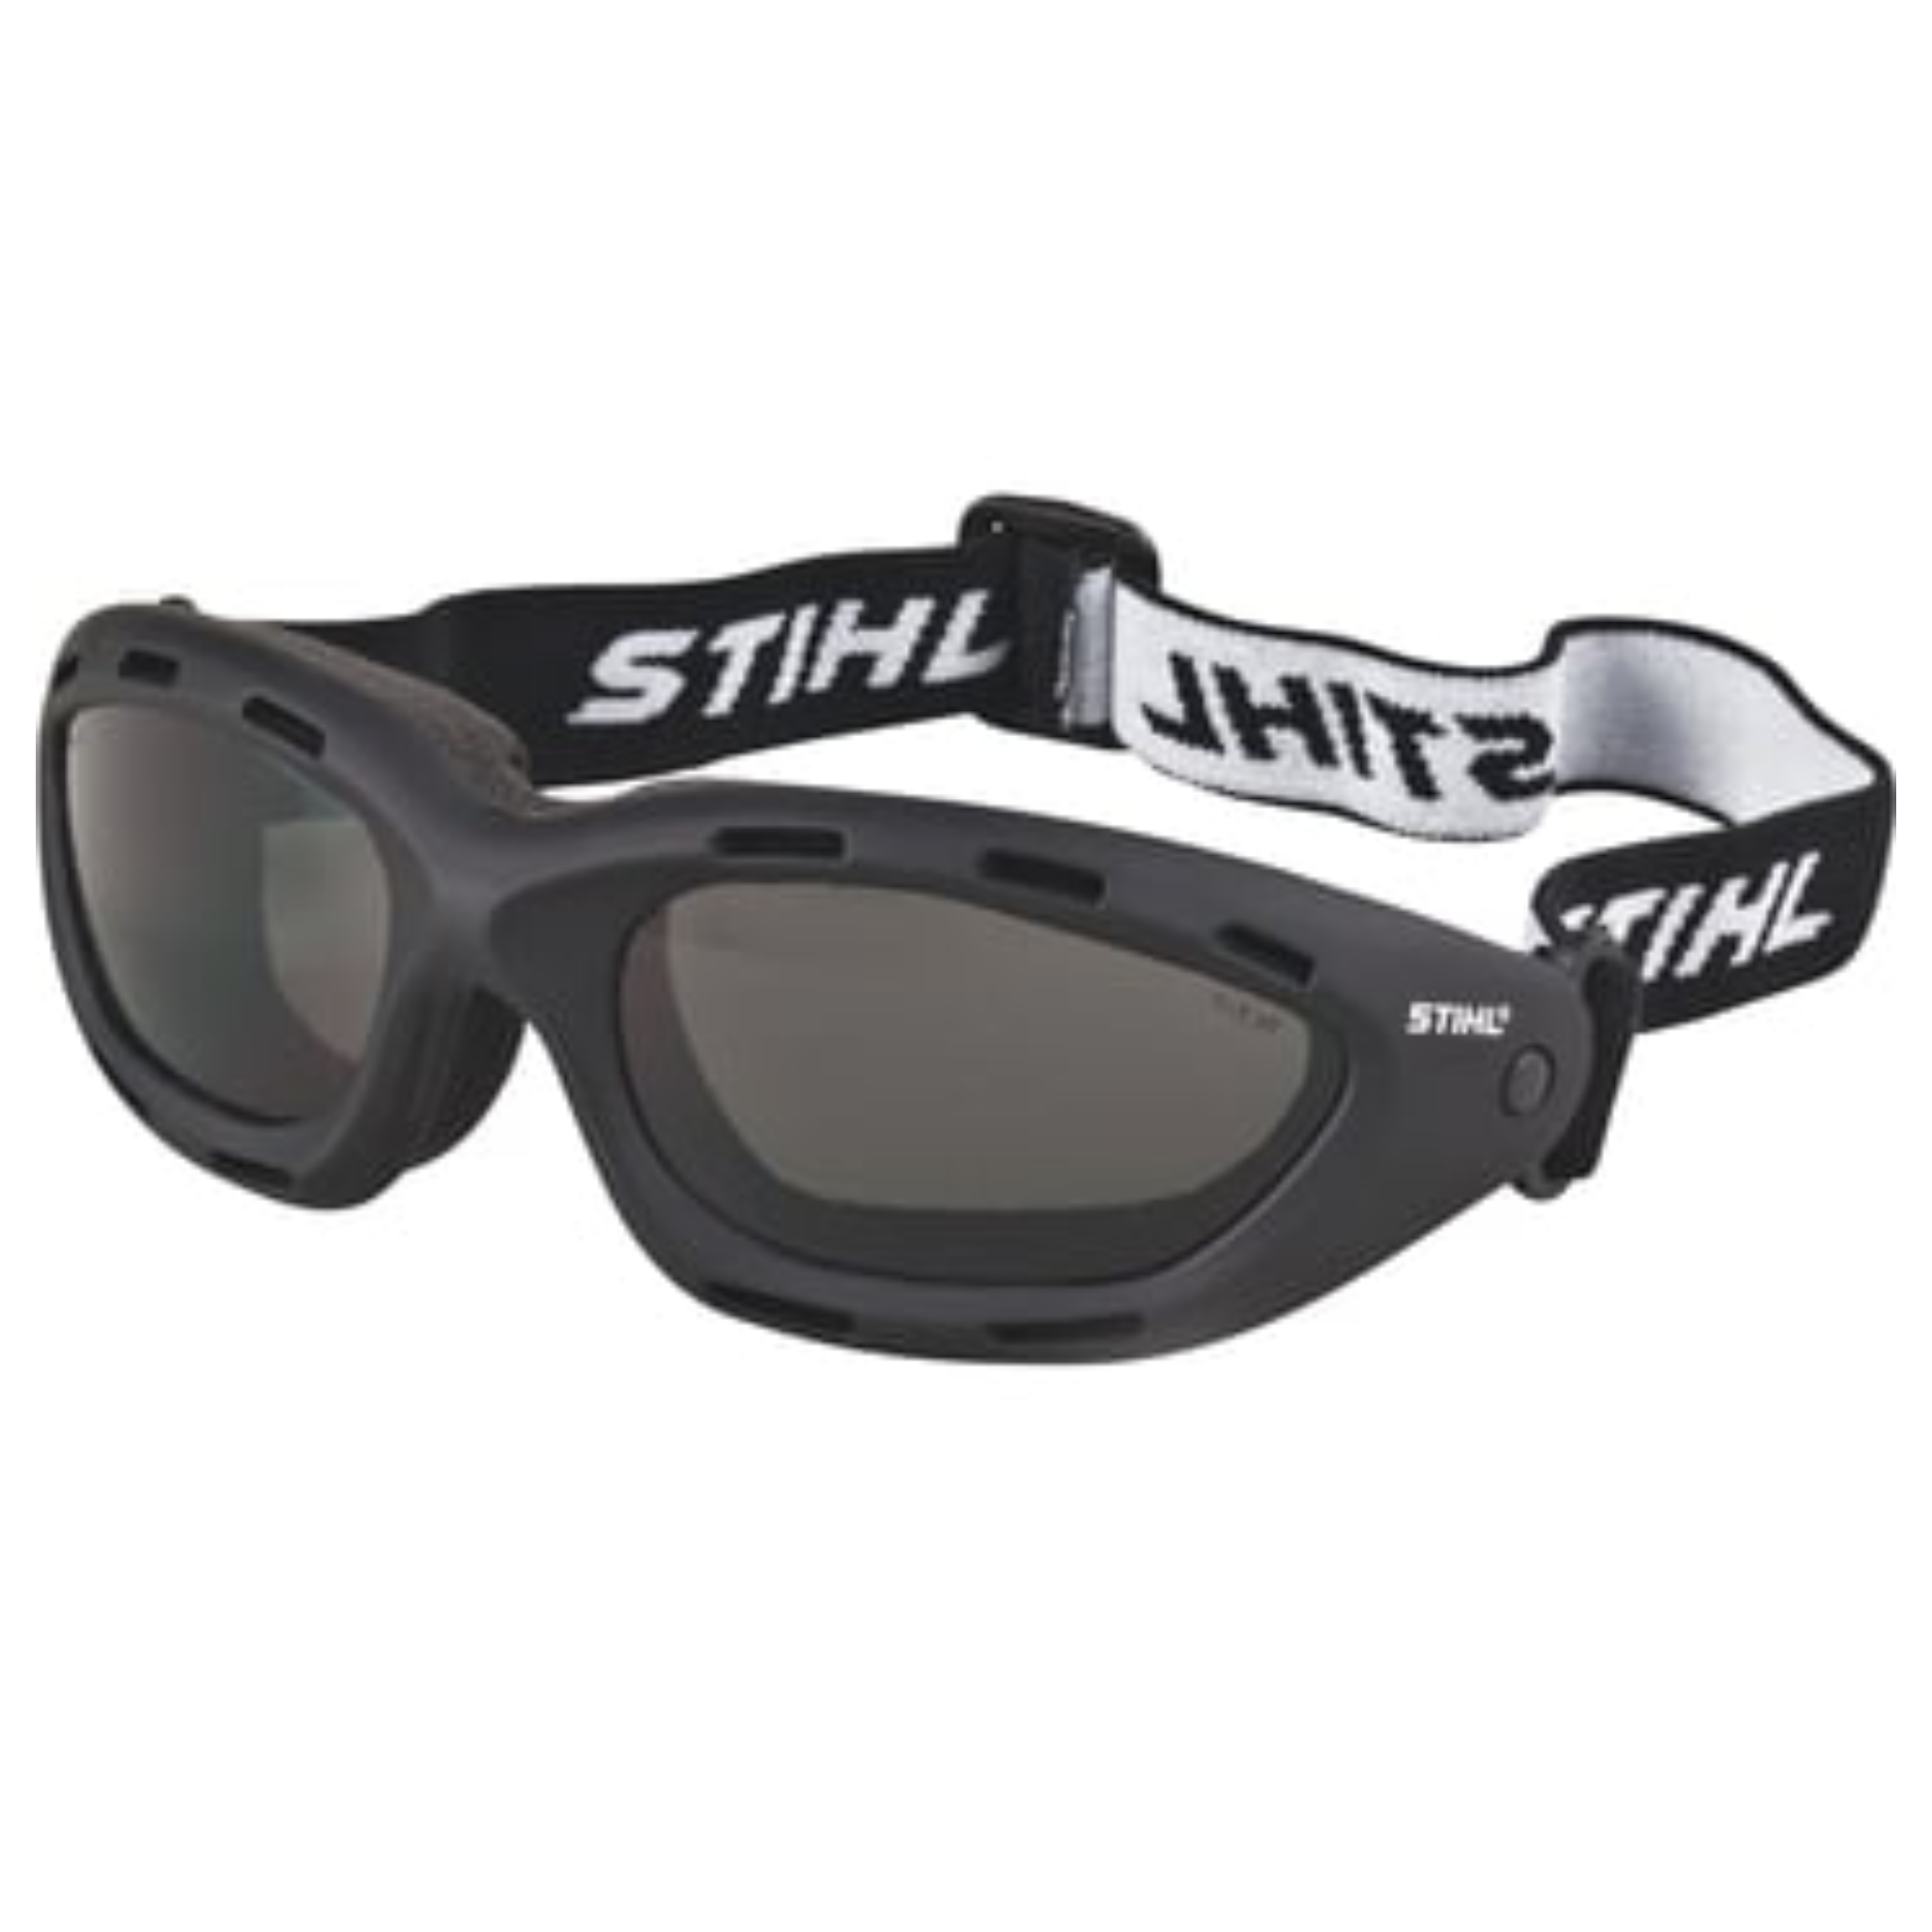 Stihl Pro Mark Goggles | Clear Lens | 7010 884 0362